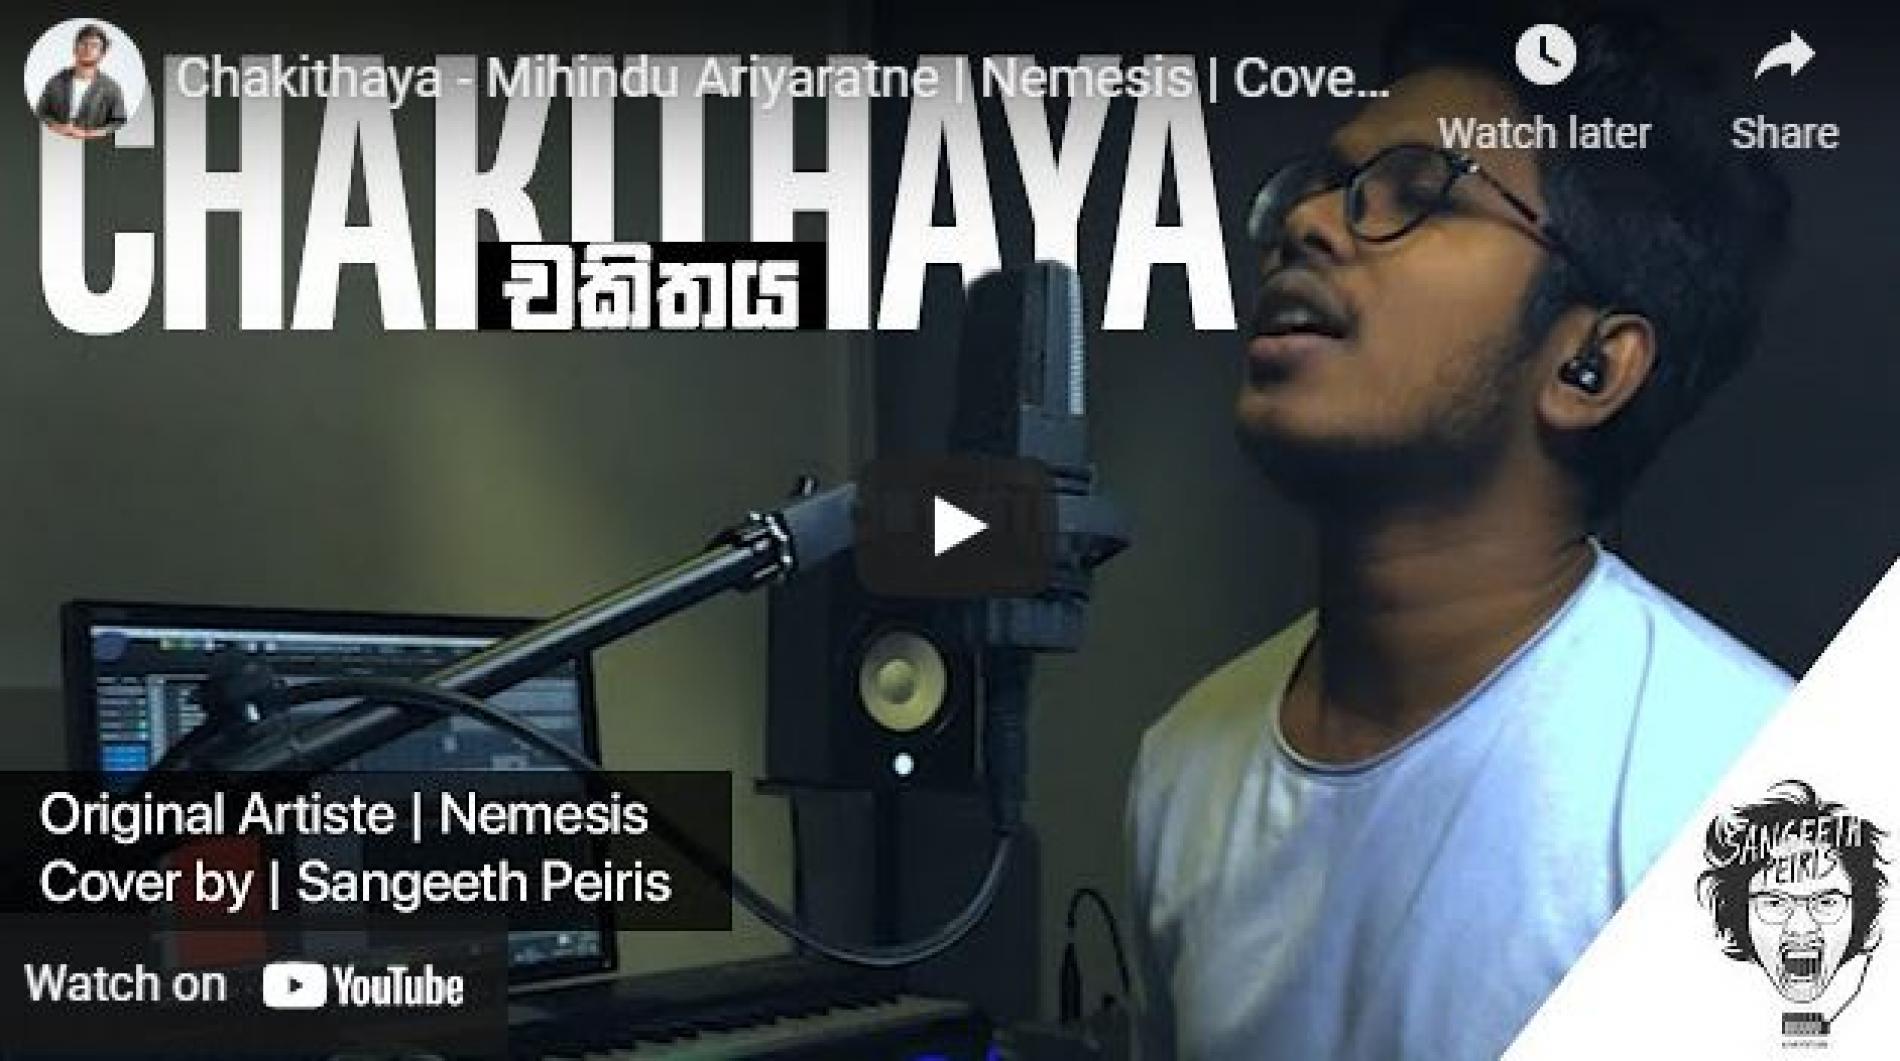 New Music : Chakithaya – Mihindu Ariyaratne | Nemesis | Cover By Sangeeth Peiris